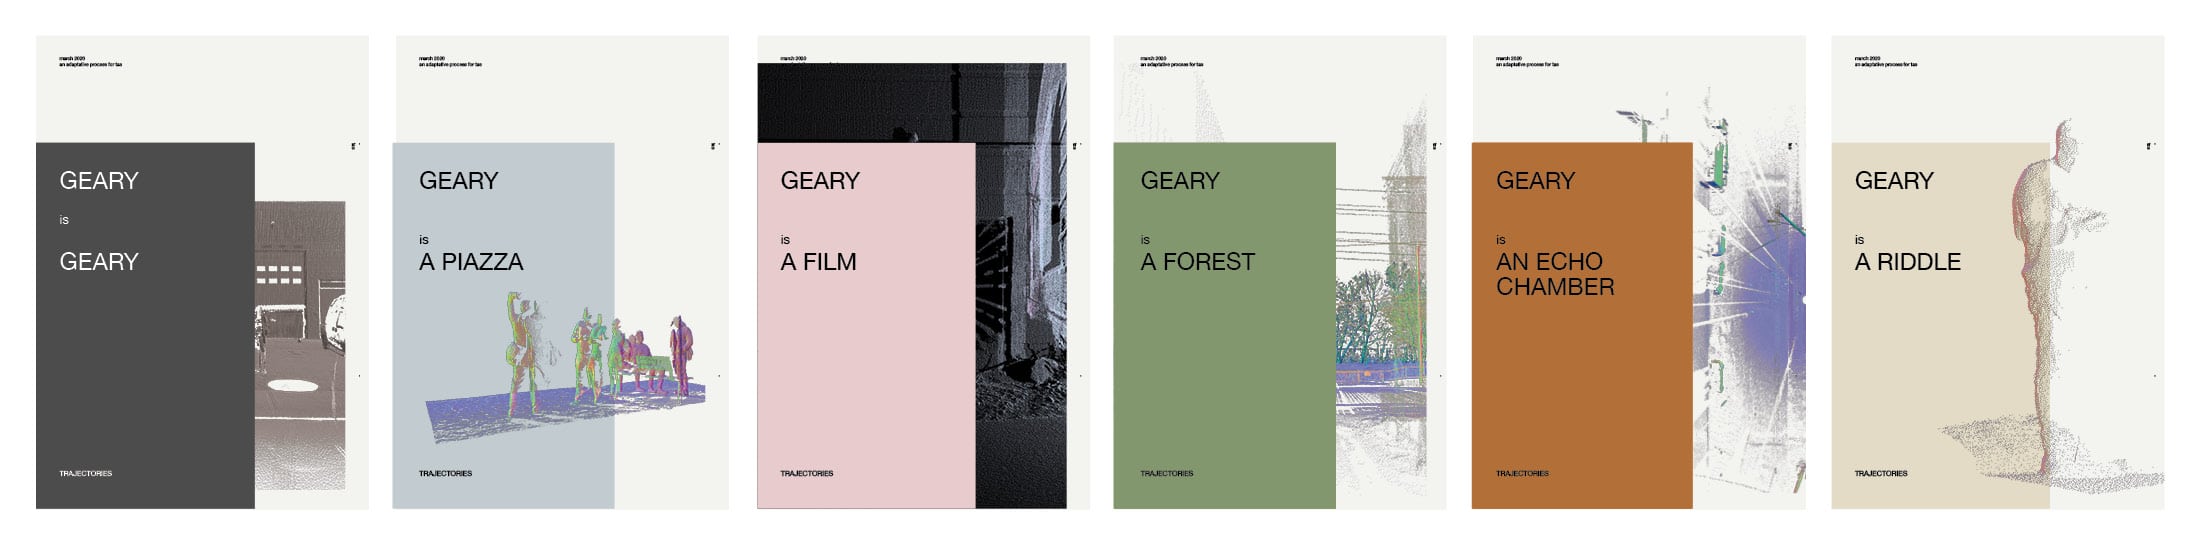 1-259-geary-toronto-fldwrk-design-research-tas-redid-booklets